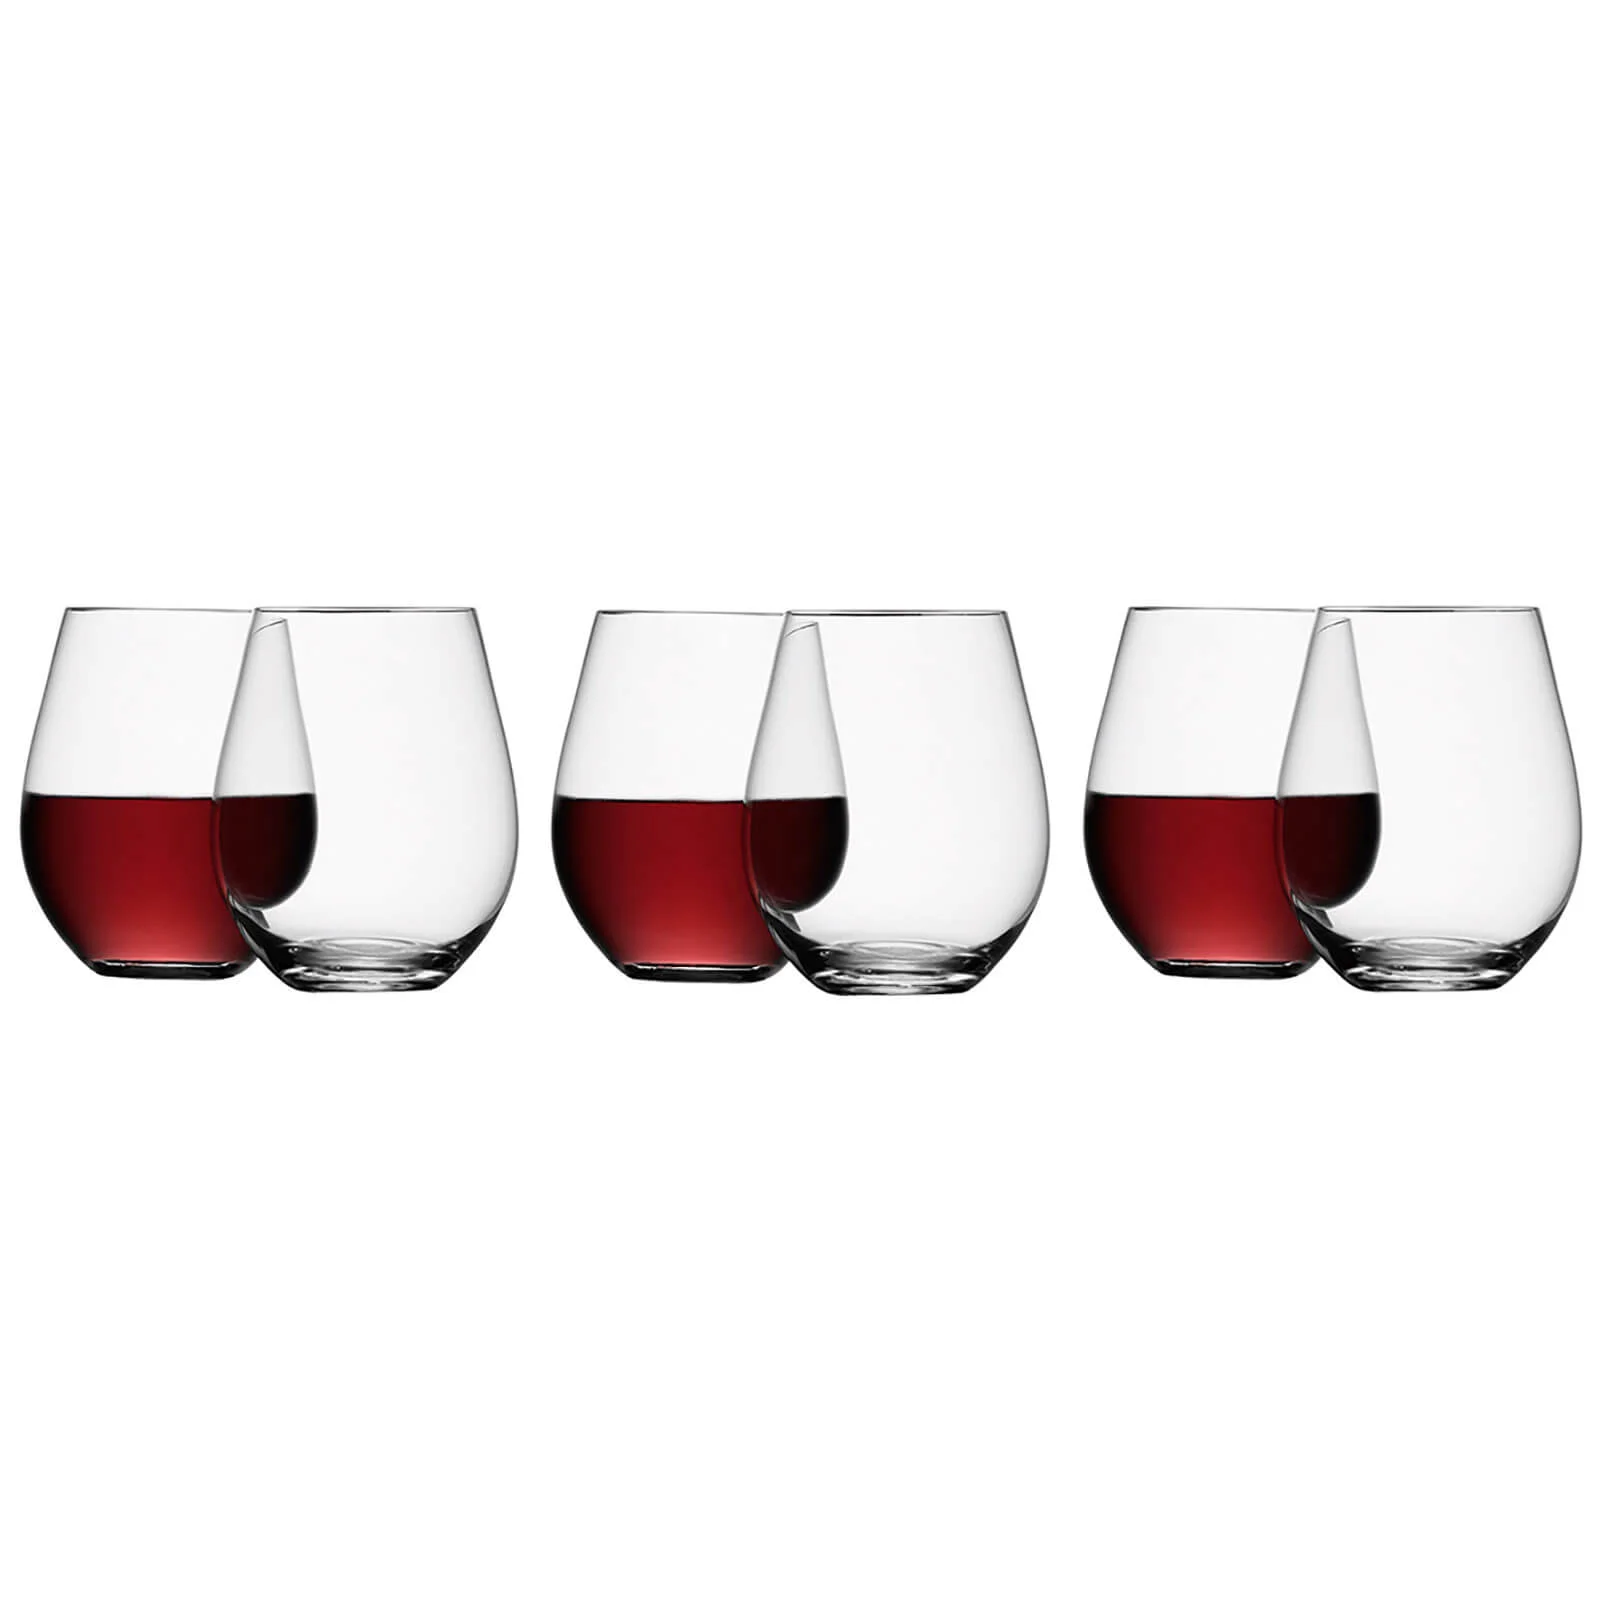 LSA Wine Stemless Red Wine Glasses 530ml - Set of 6 Image 1